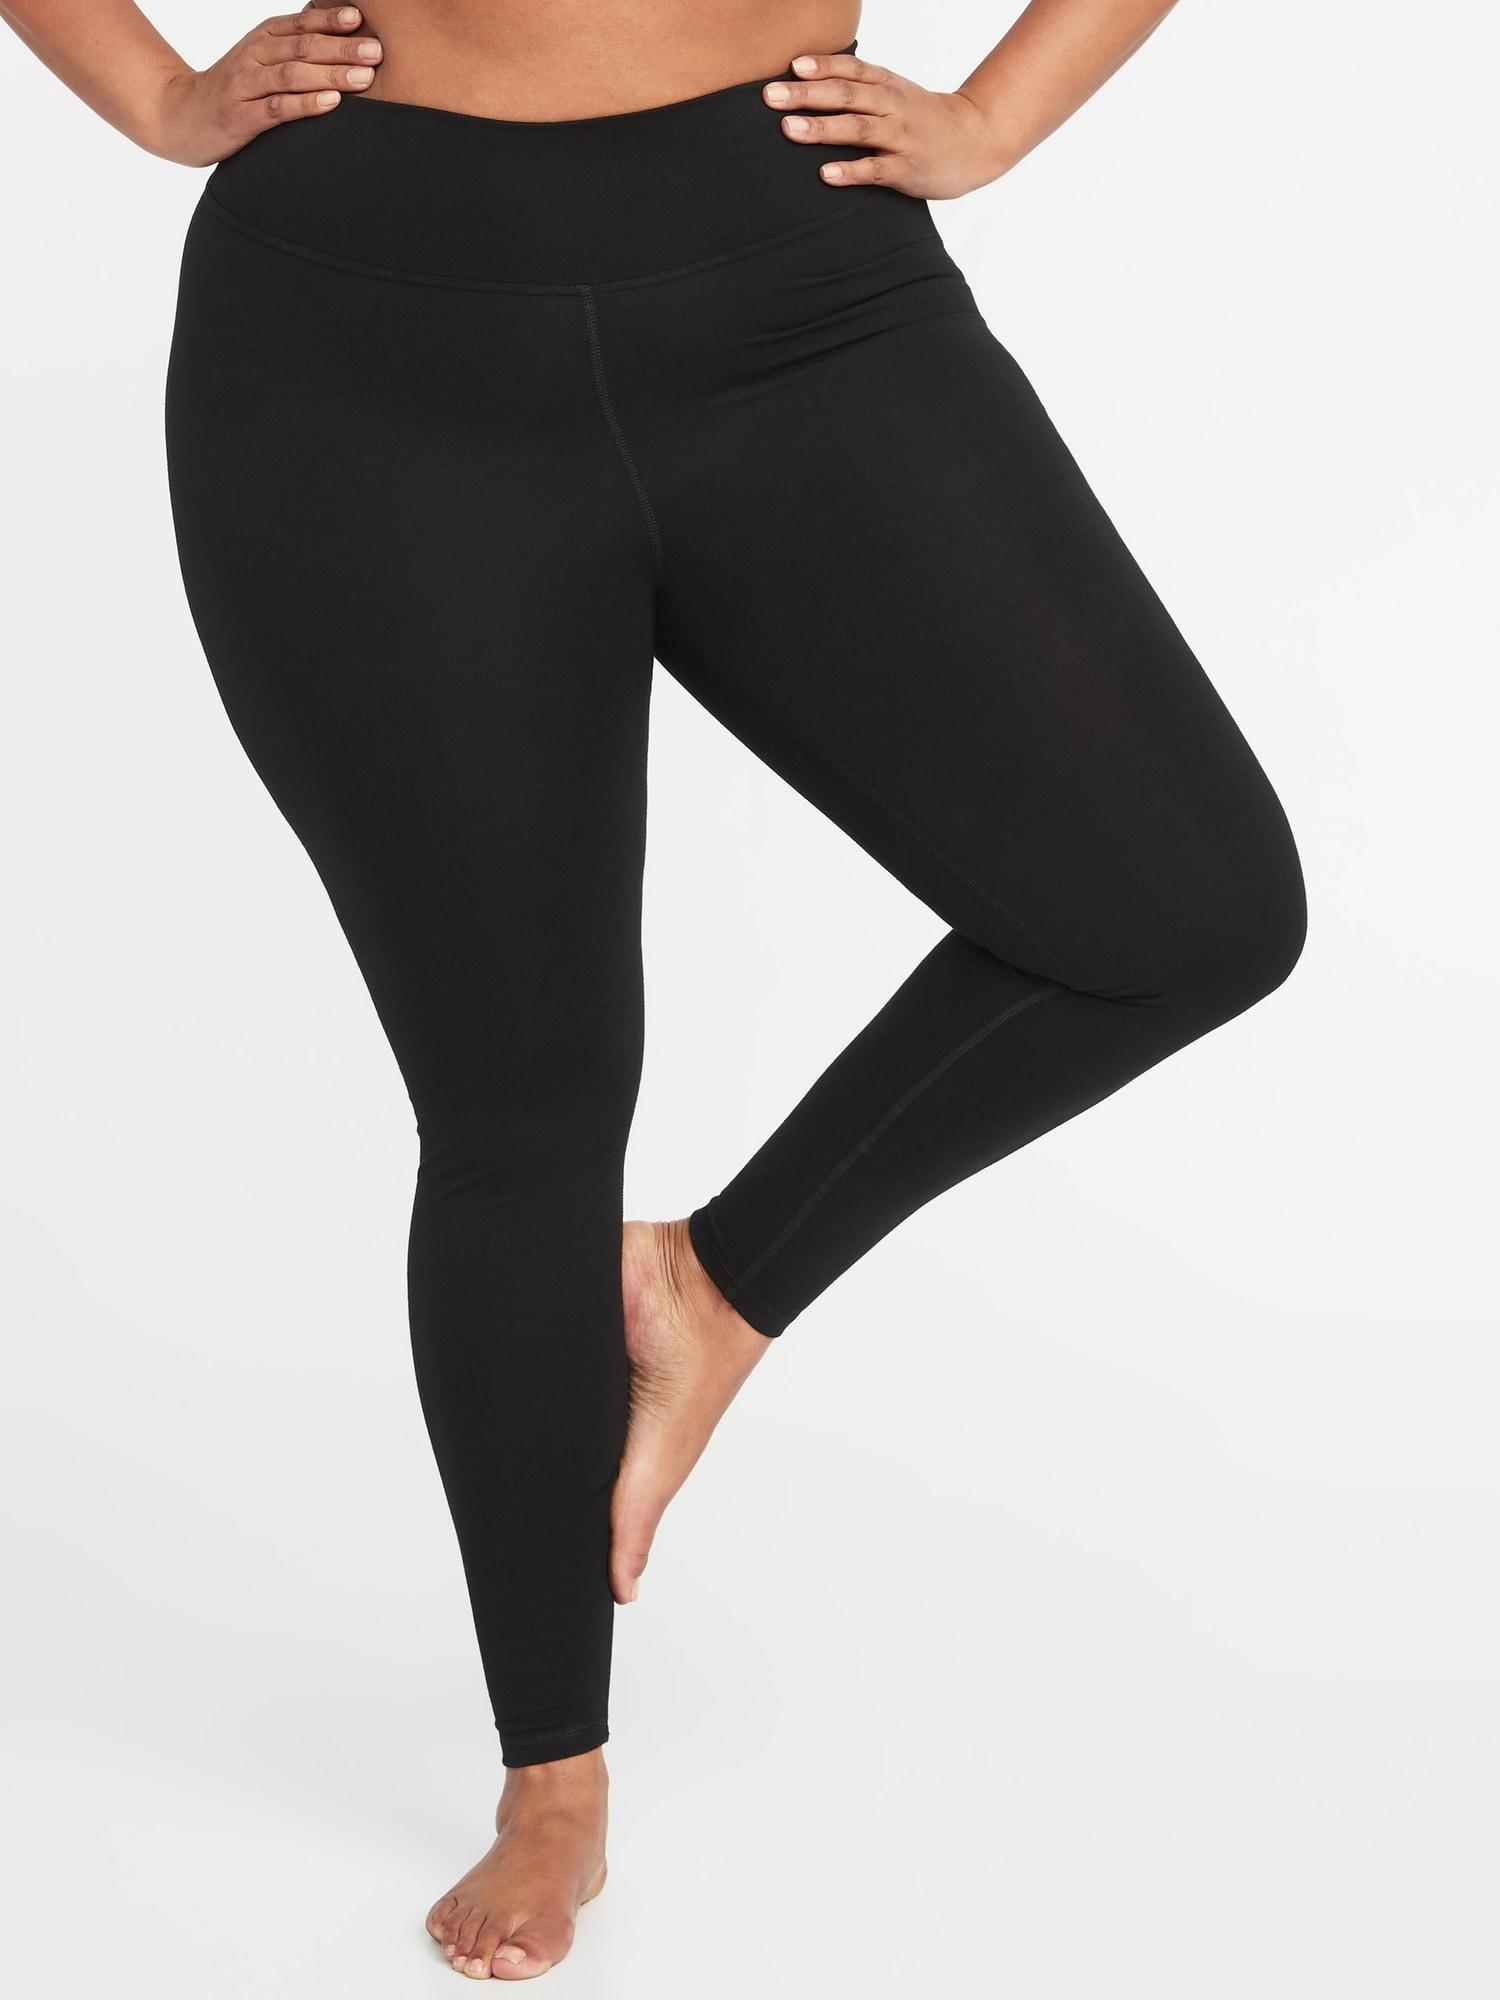 Buy TNNZEET 3 Pack Plus Size Capri Leggings for Women, High Waisted Black  Workout Yoga Leggings 2X 3X 4X at